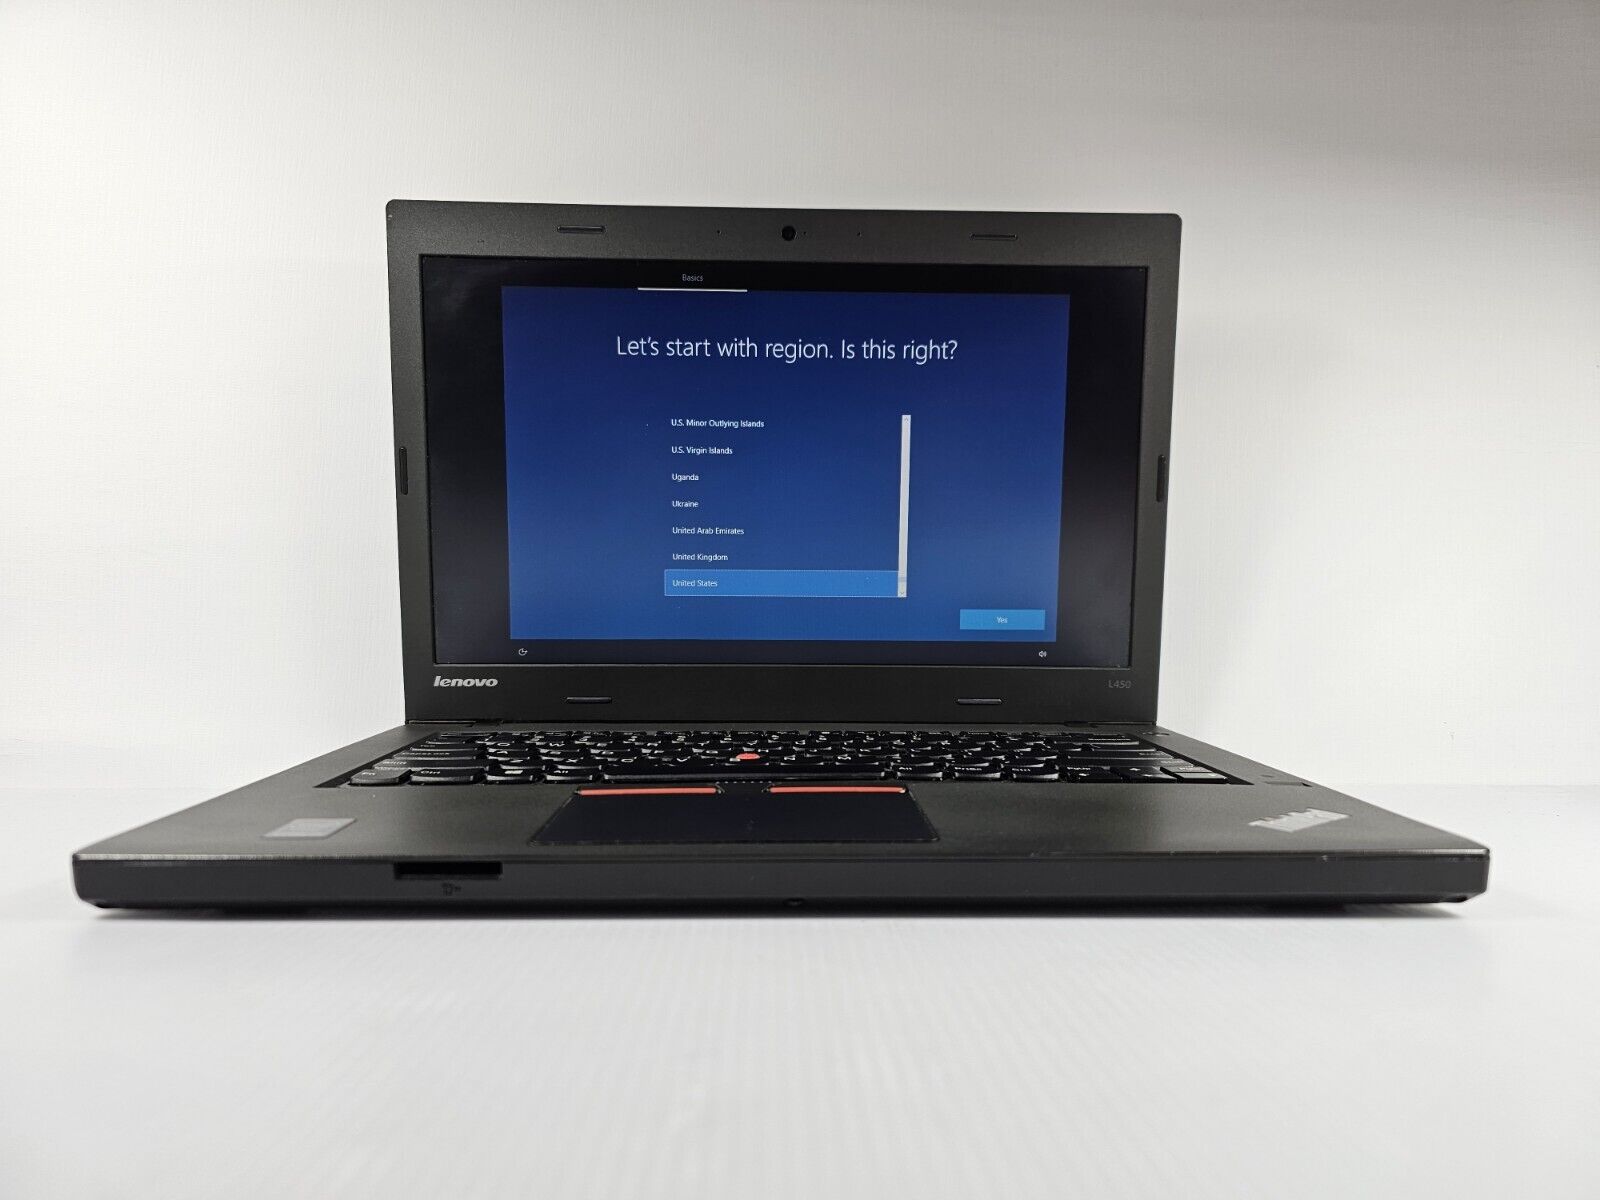 LENOVO ThinkPad L450 Intel Core i5 5200U @ 2.20GHz 8GB RAM 500GB LAPTOP 